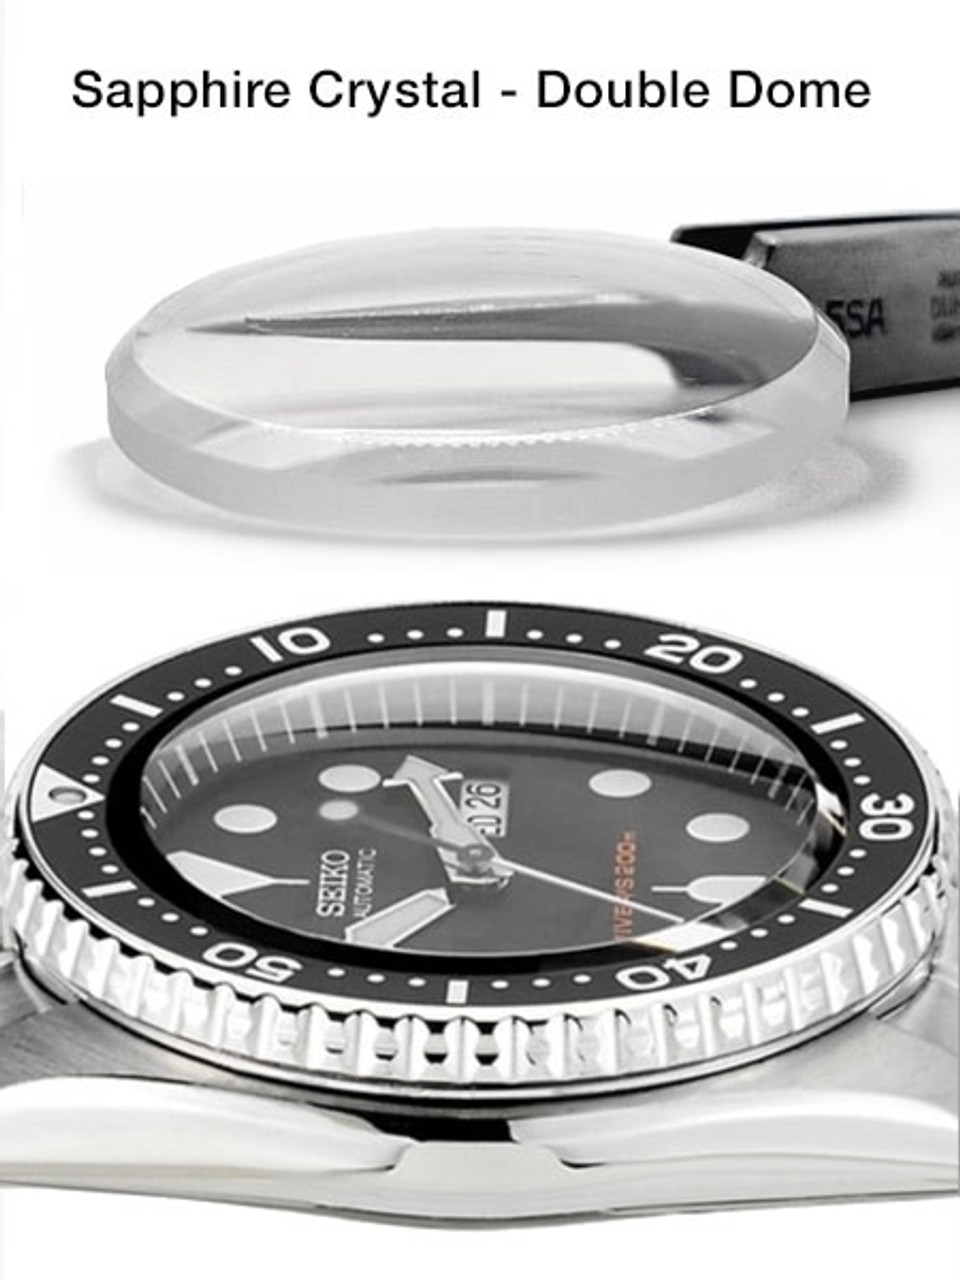 Custom Modded Seiko Automatic Dive Watch SKX007K1